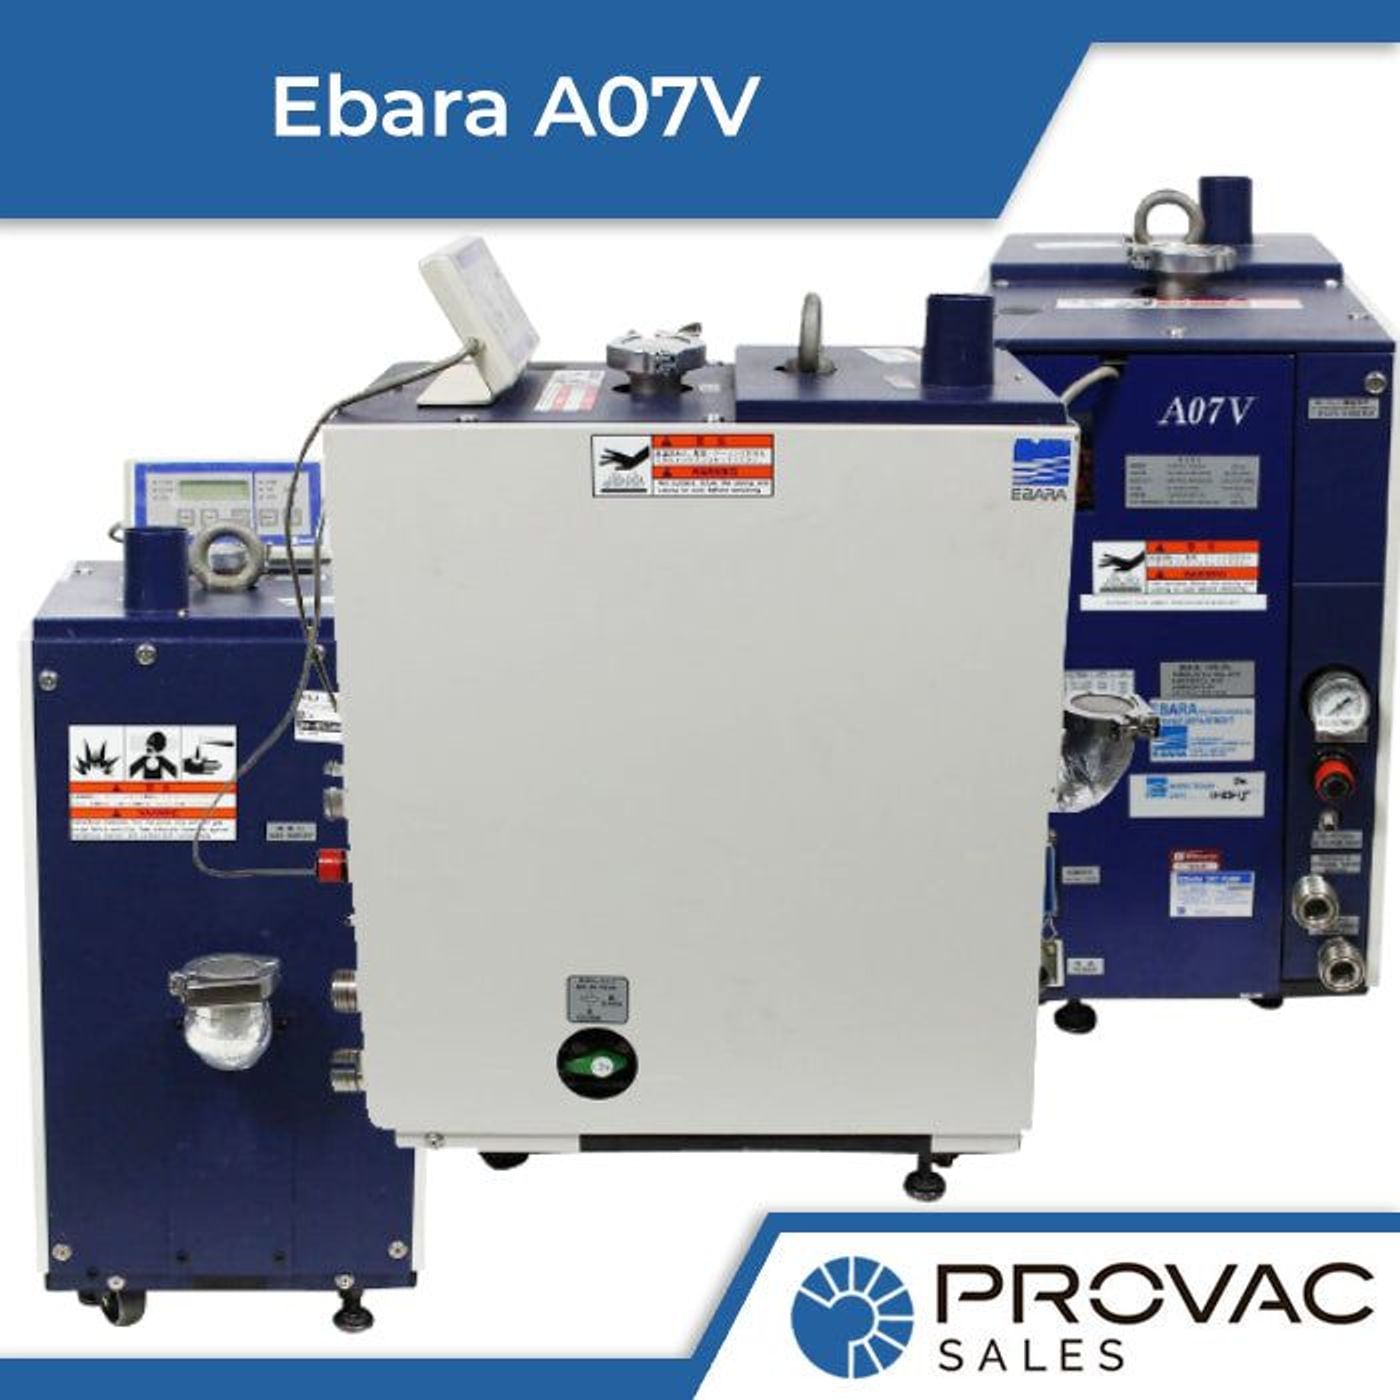 Product Spotlight: Ebara A07V Dry Vacuum Pump